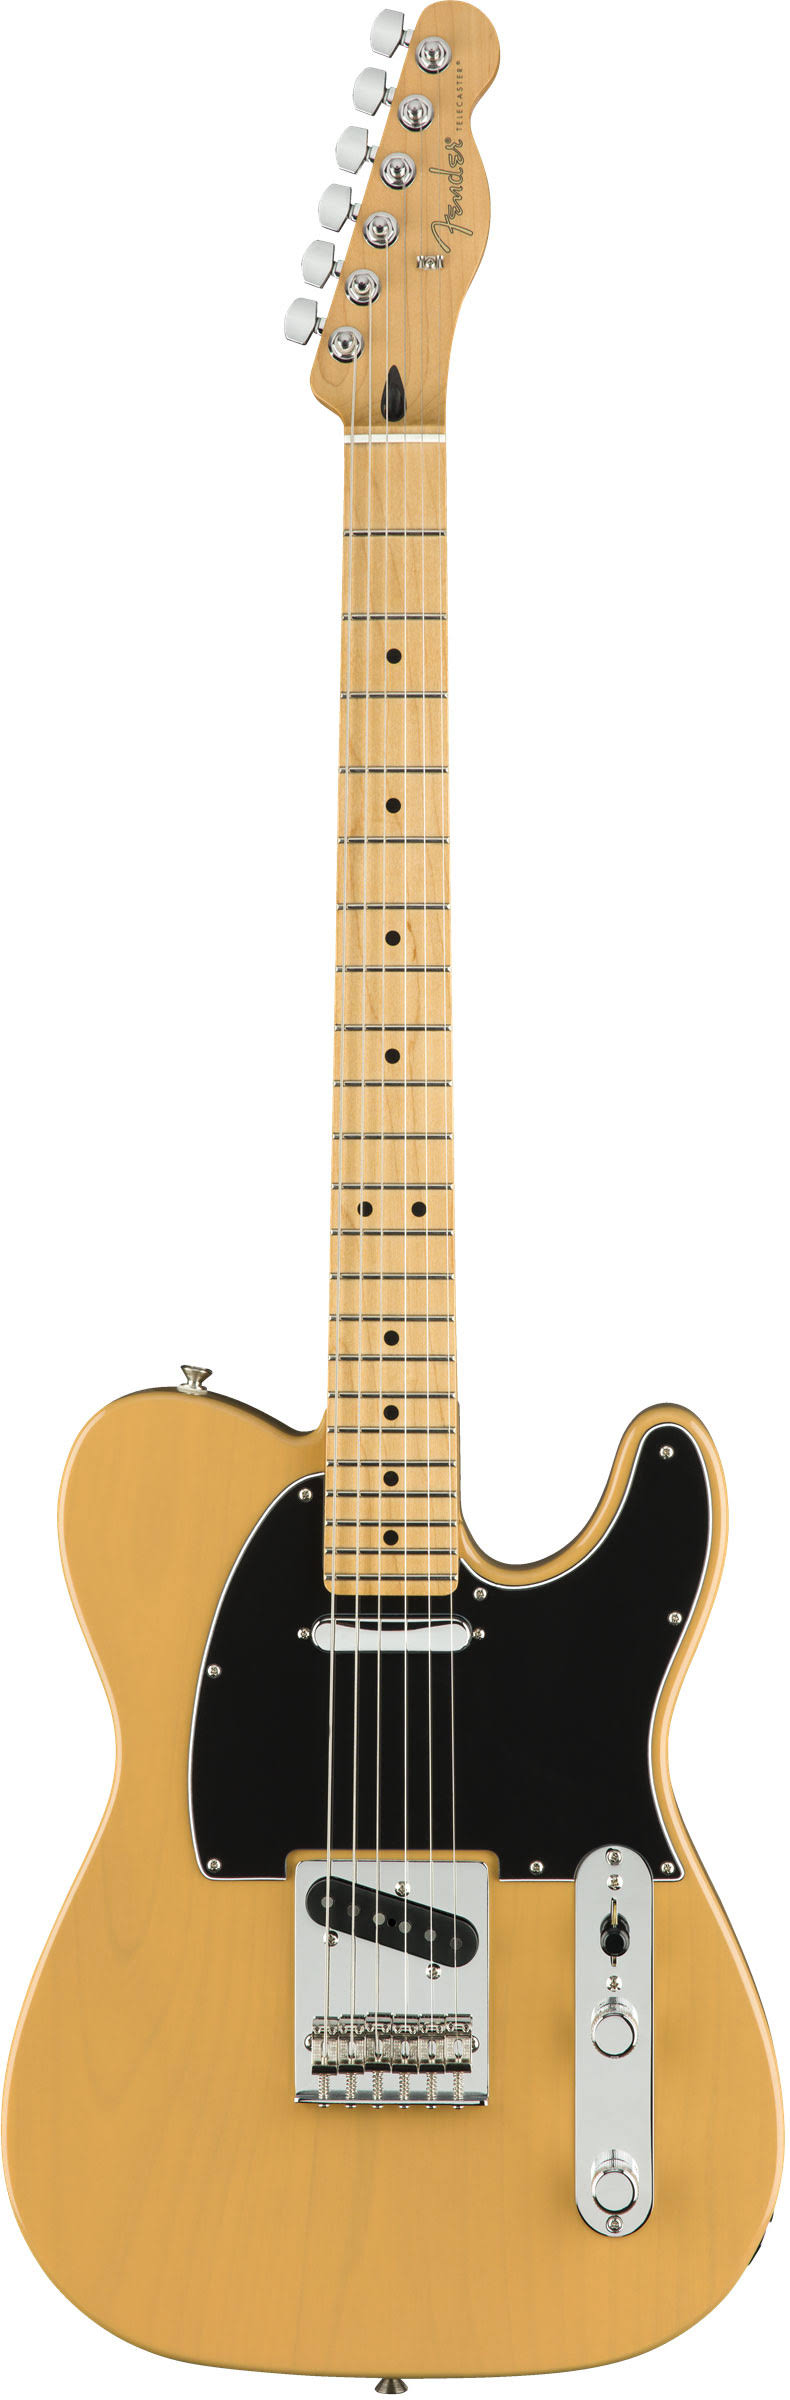 Fender Player Telecaster - Butterscotch Blonde / Maple